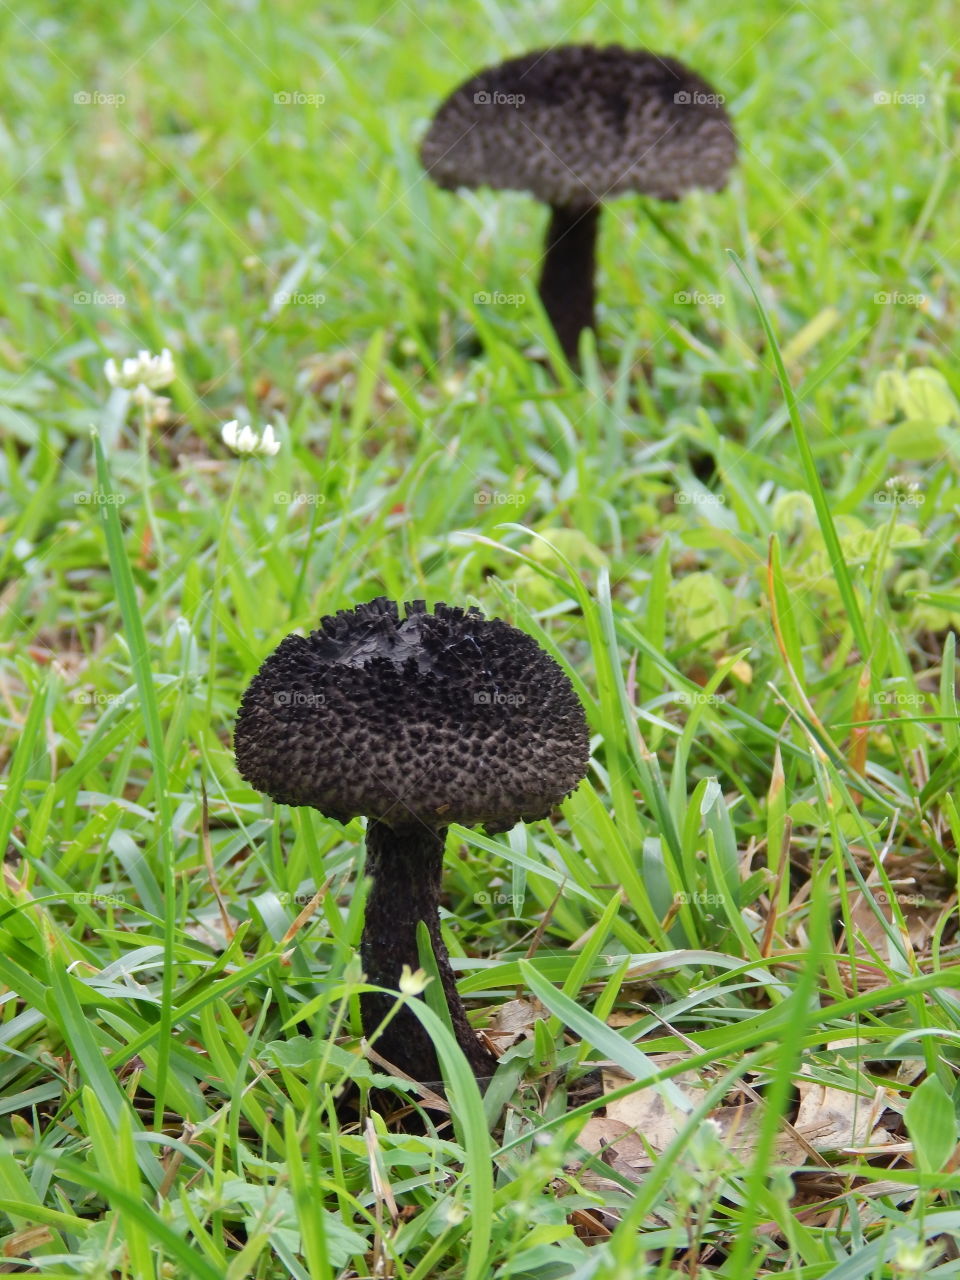 Black mushrooms in green grass